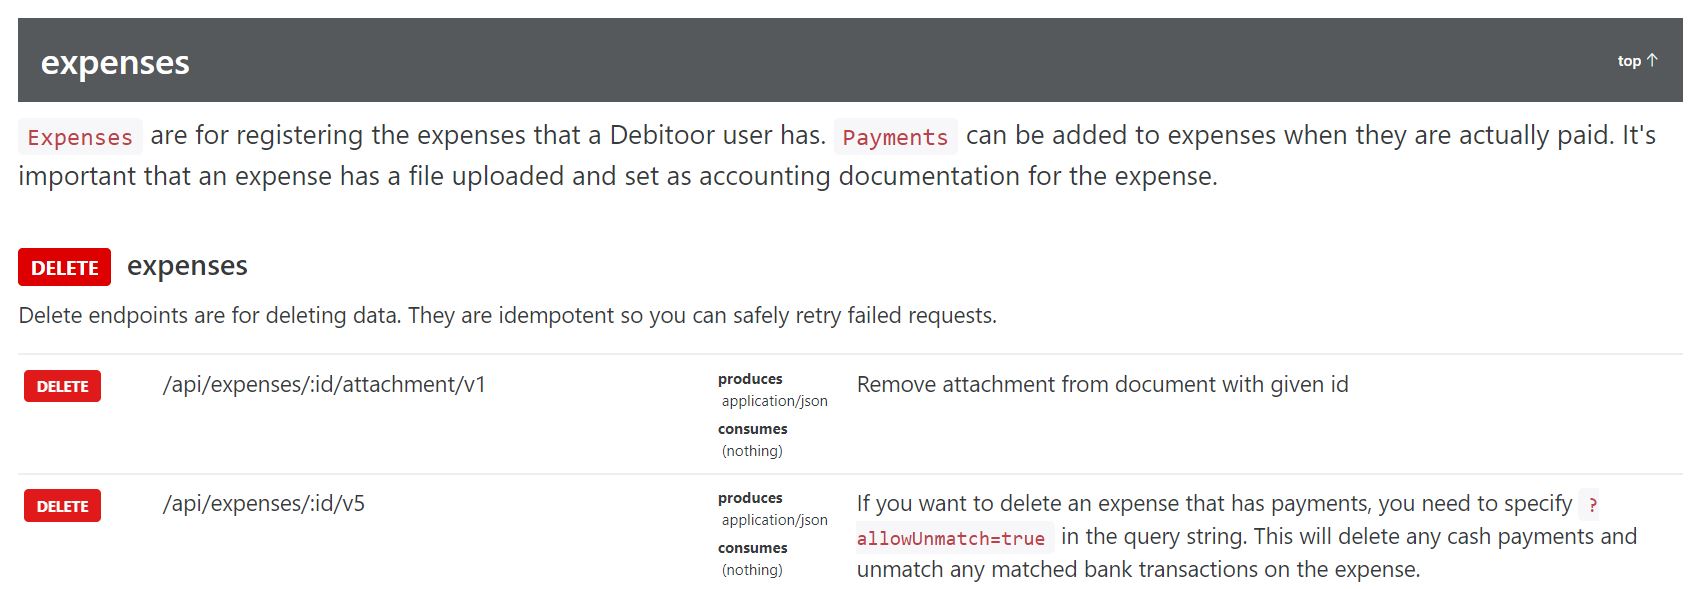 API documentation from Debitoor